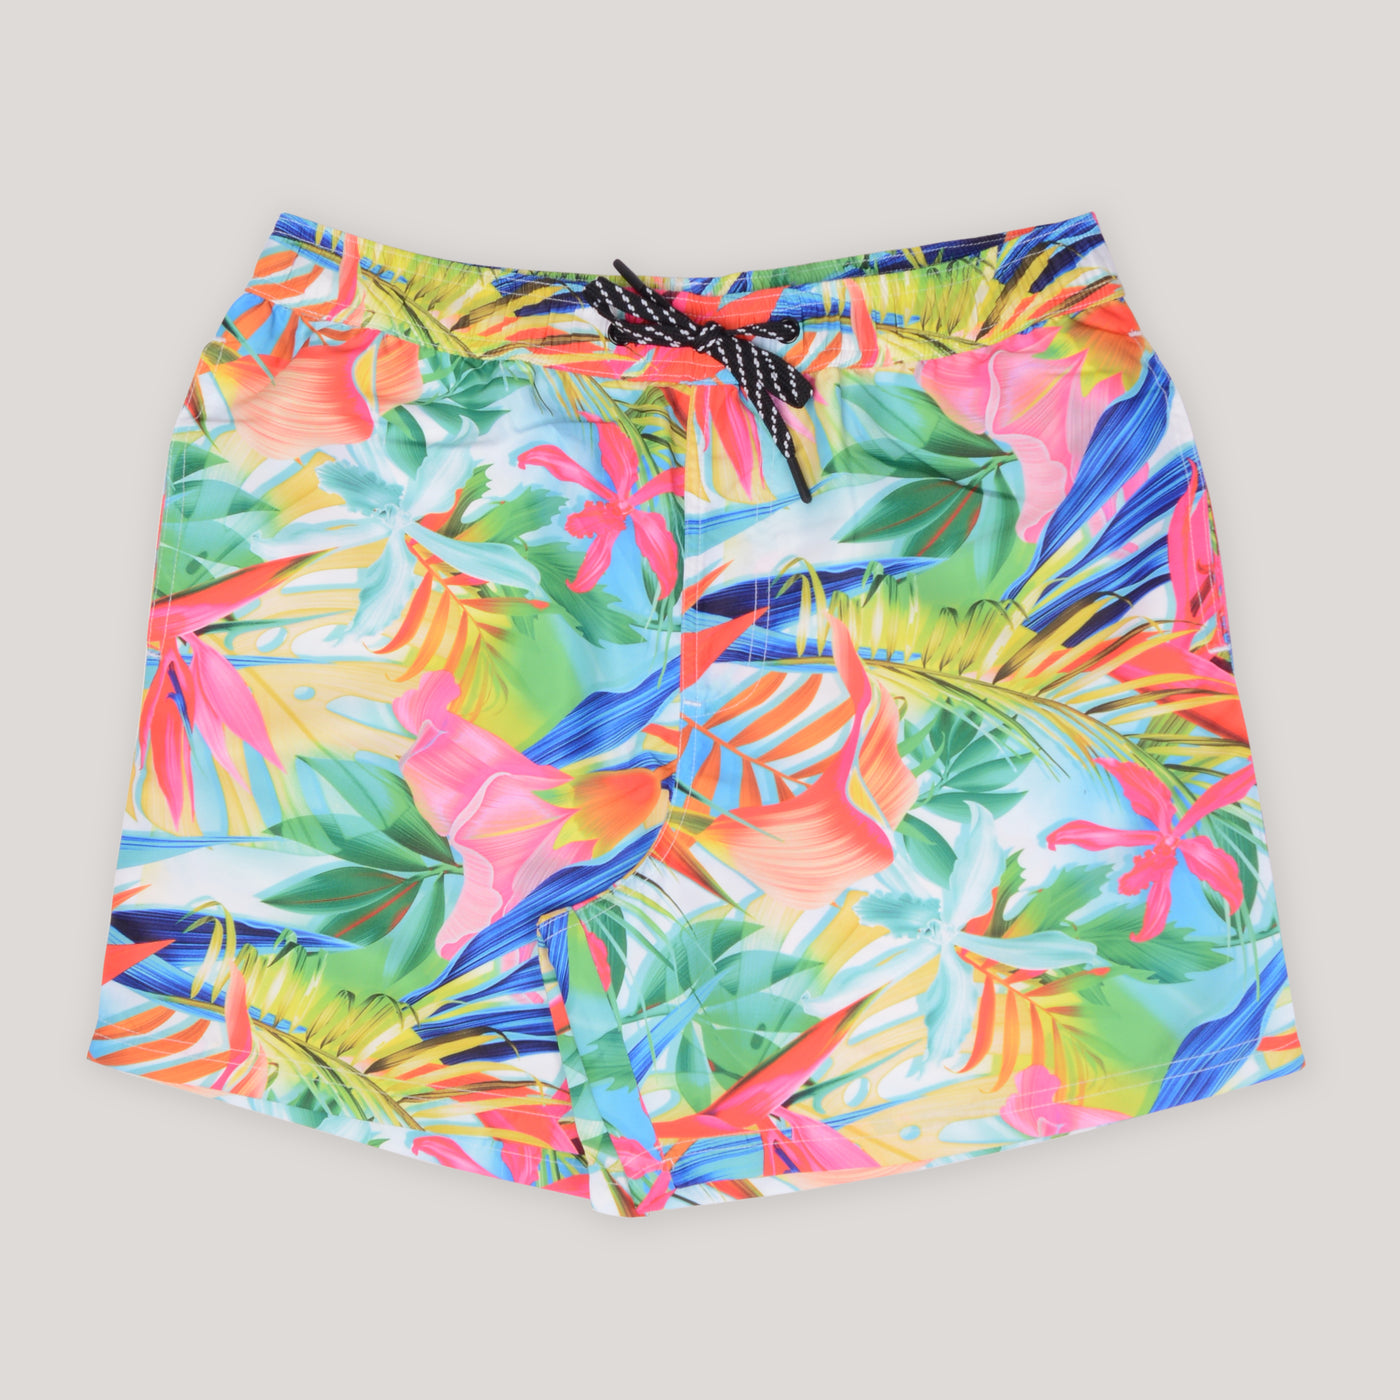 Buy now paint me a rainbow swim shorts